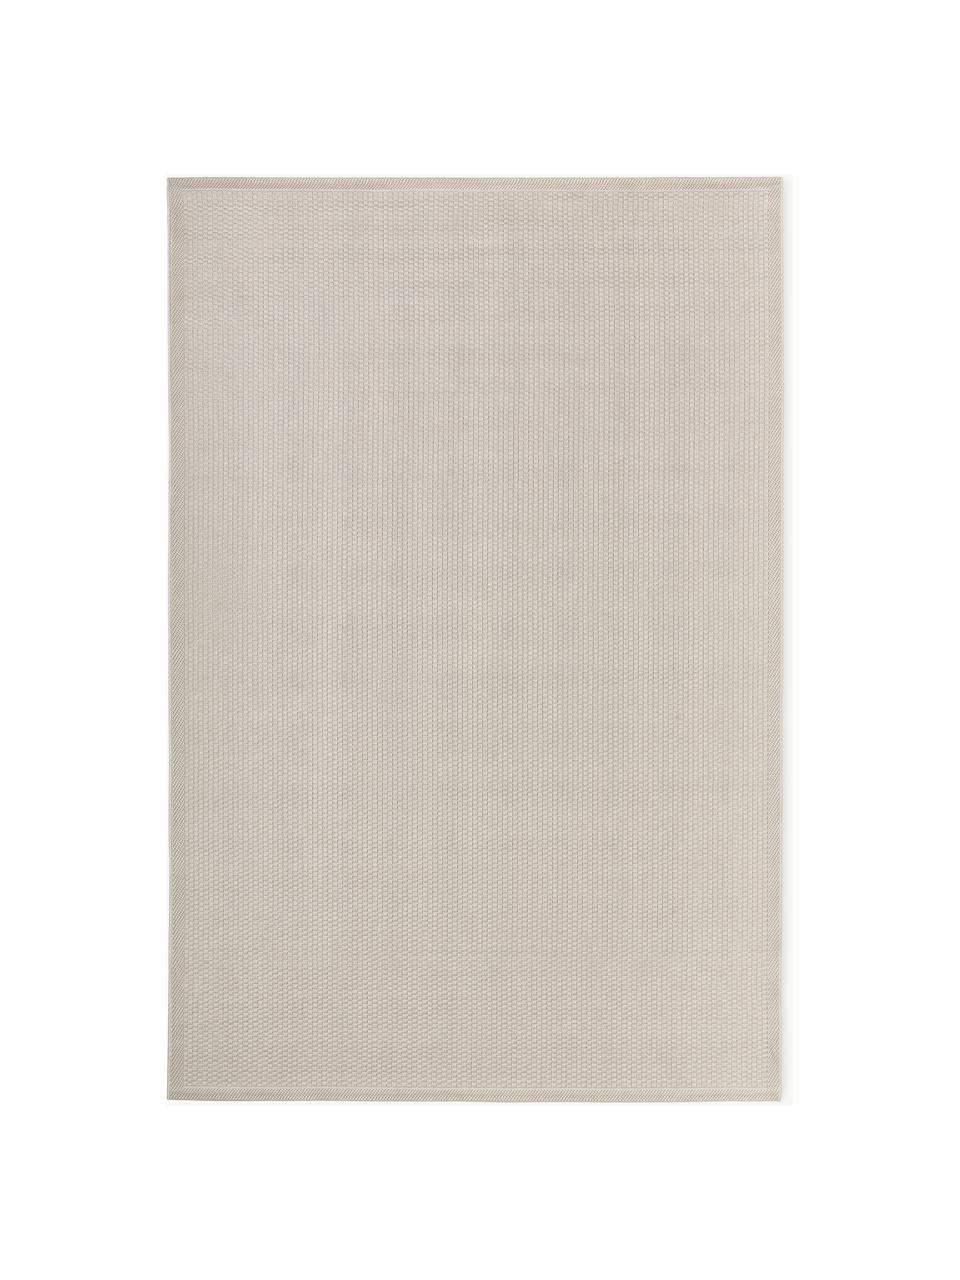 Interiérový/exteriérový koberec Toronto, 100 % polypropylen, Béžová, Š 160 cm, D 230 cm (velikost M)